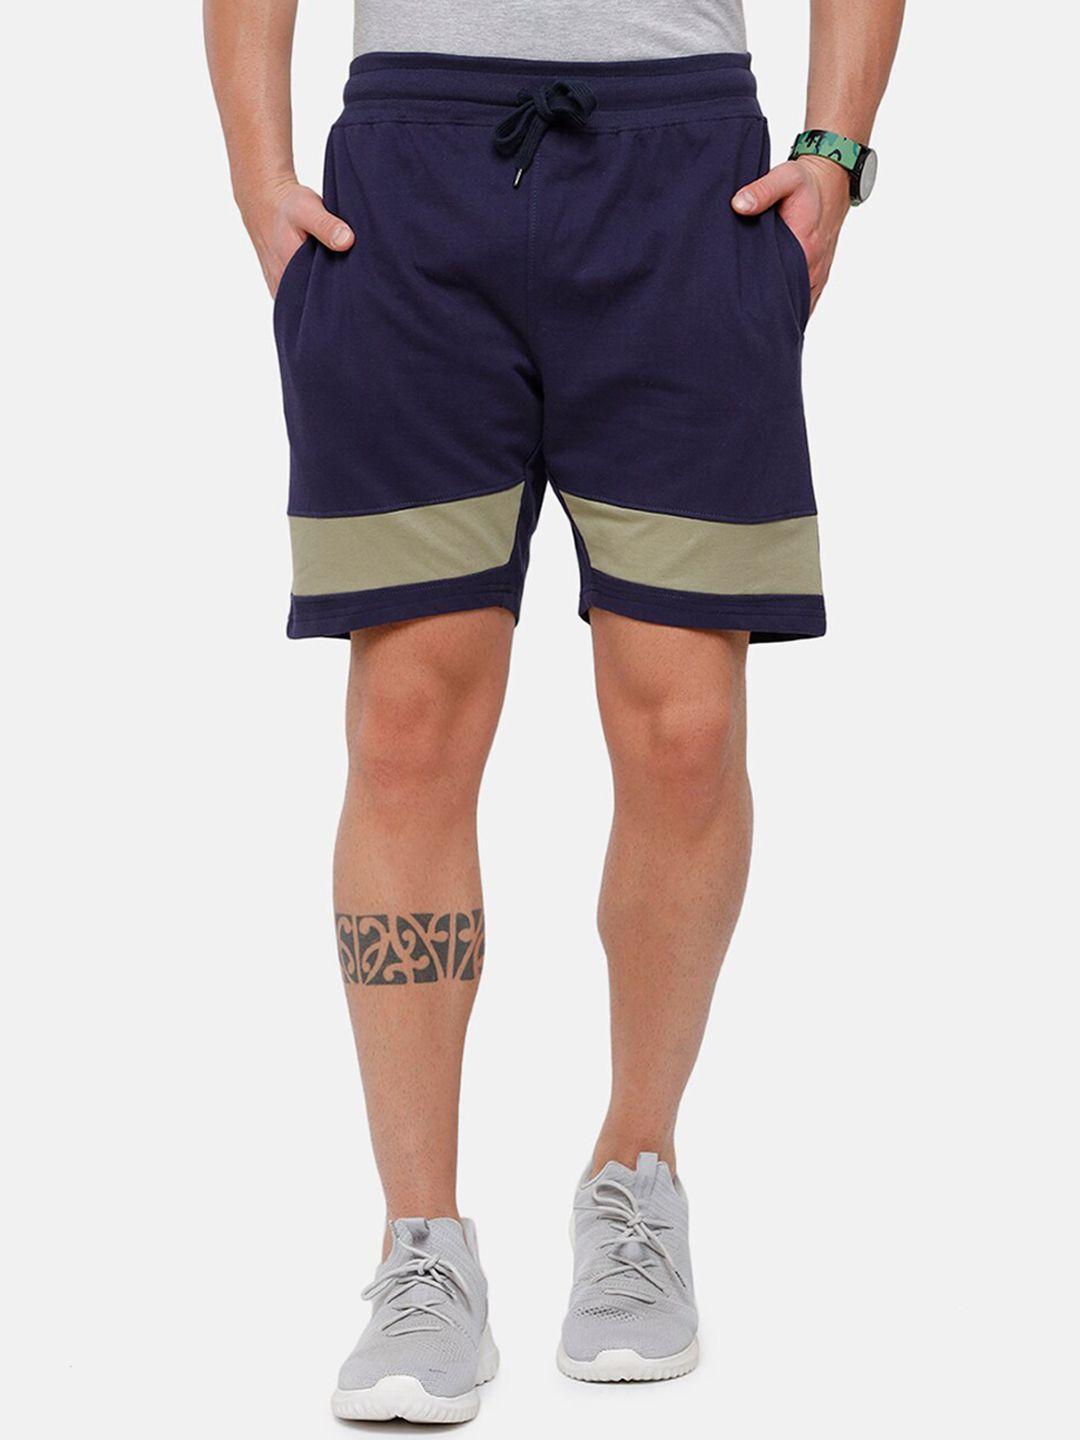 madsto-men-colourblocked-pure-cotton-shorts